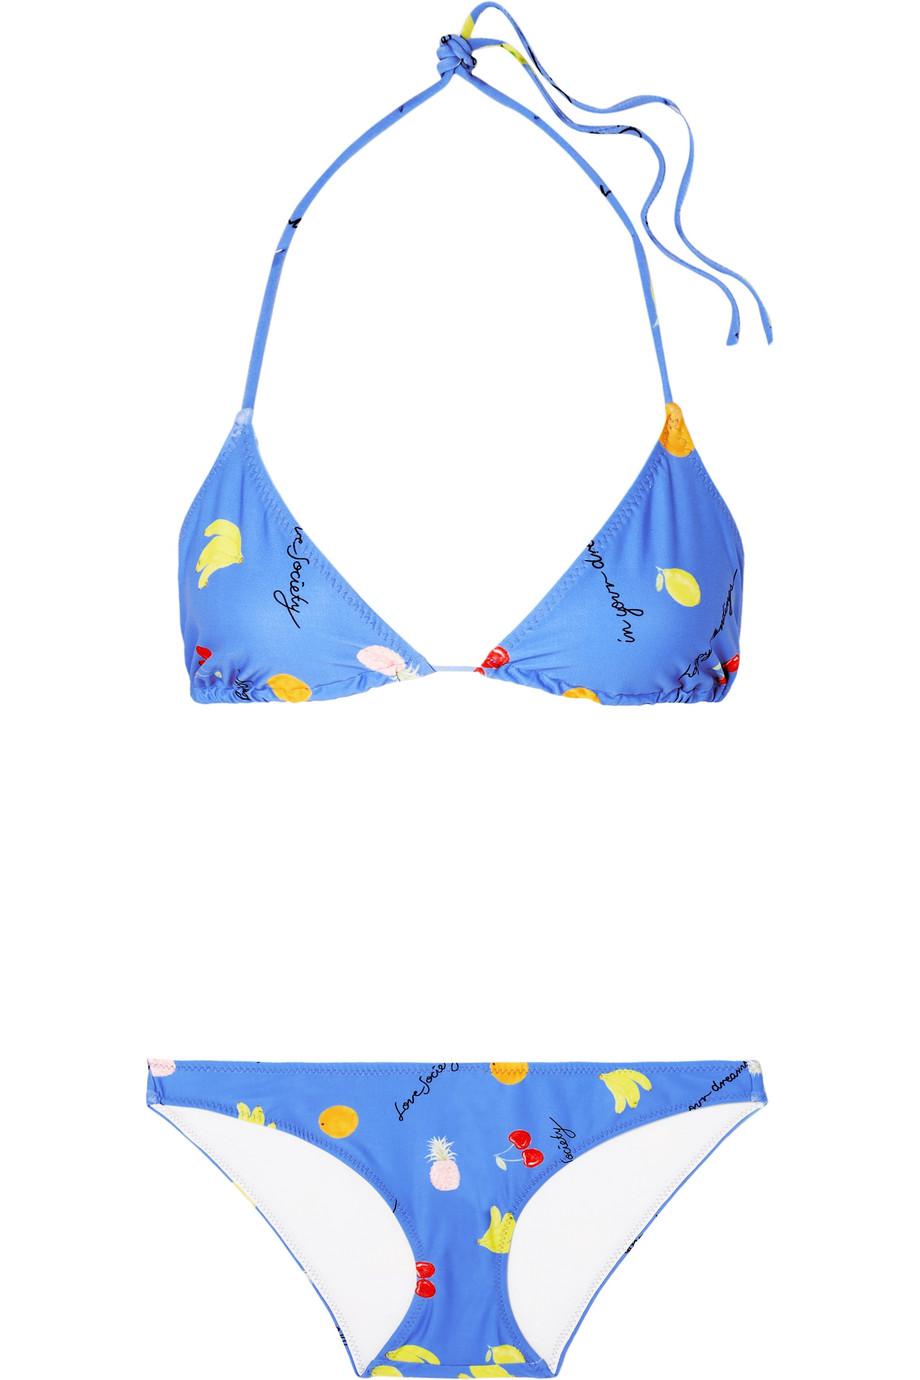 Ganni Synthetic Dexies Printed Triangle Bikini in Azure (Blue) - Lyst